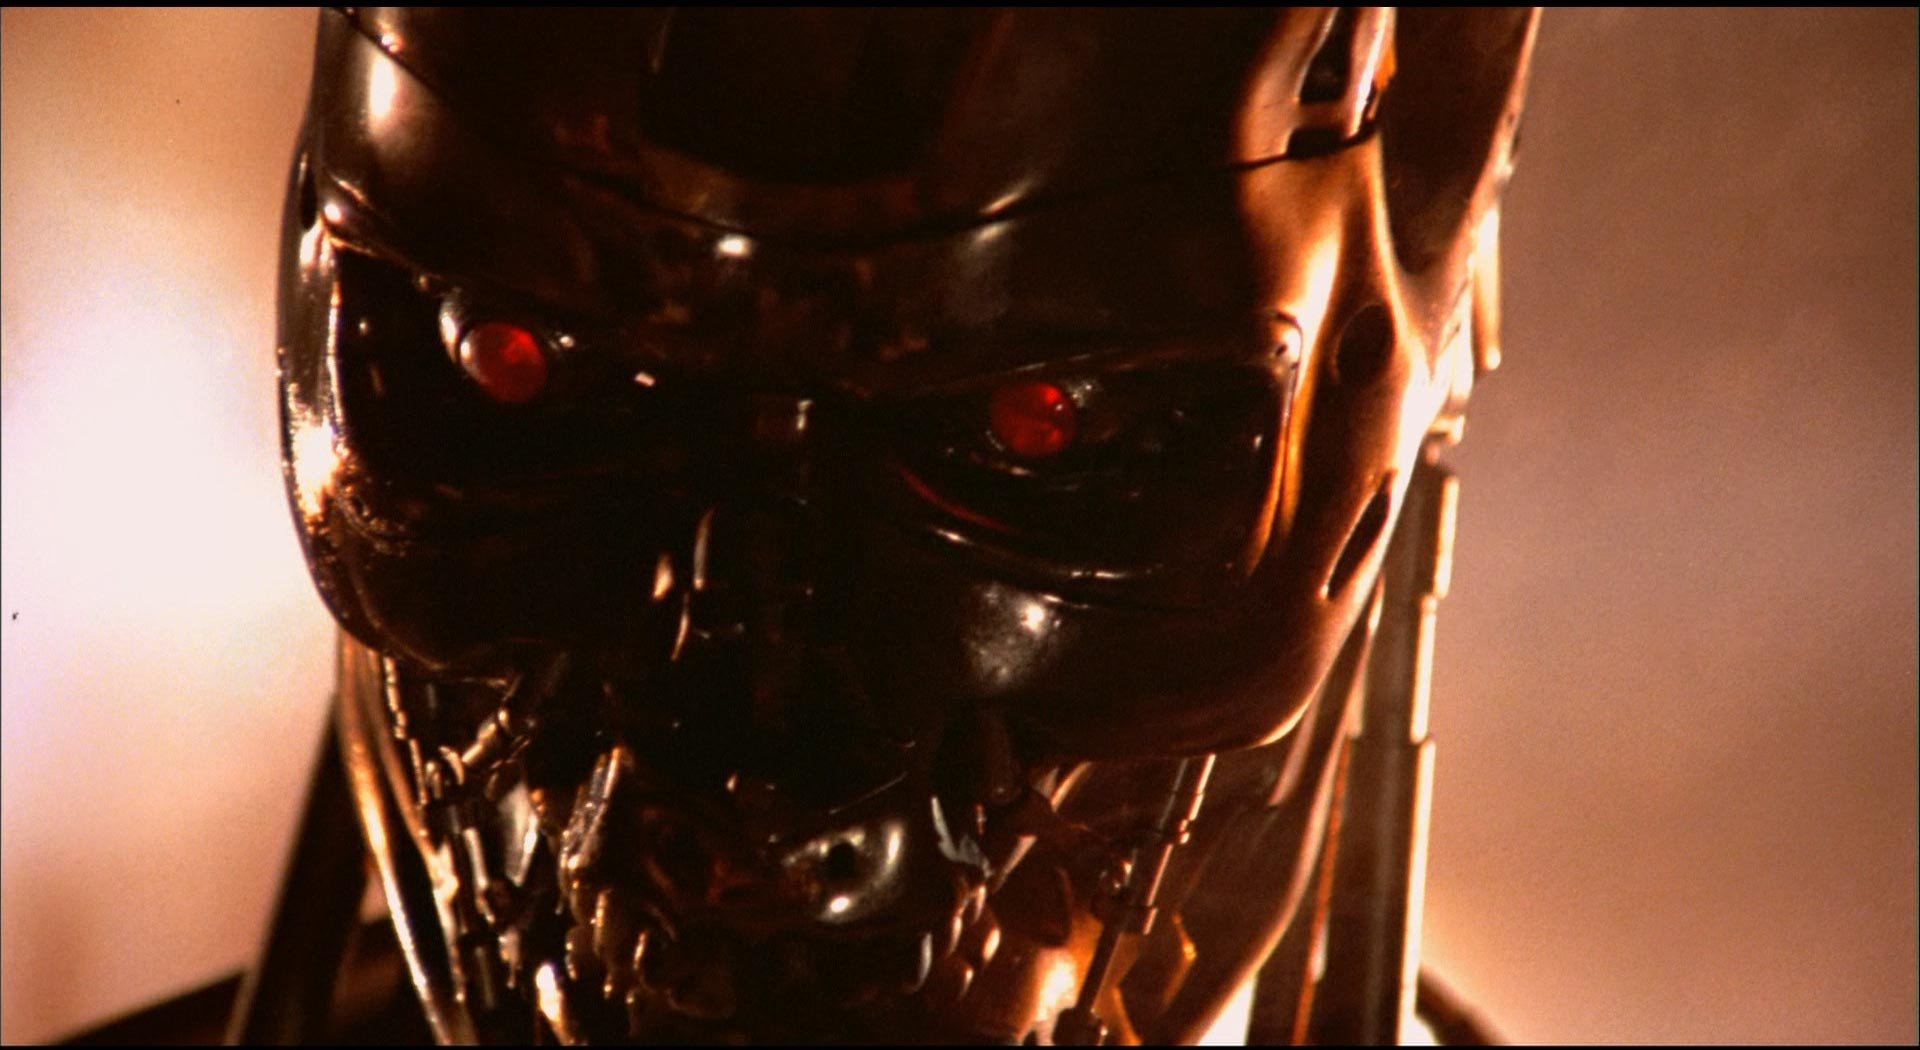 terminator, Robot, Cyborg, Sci fi, Futuristic Wallpaper